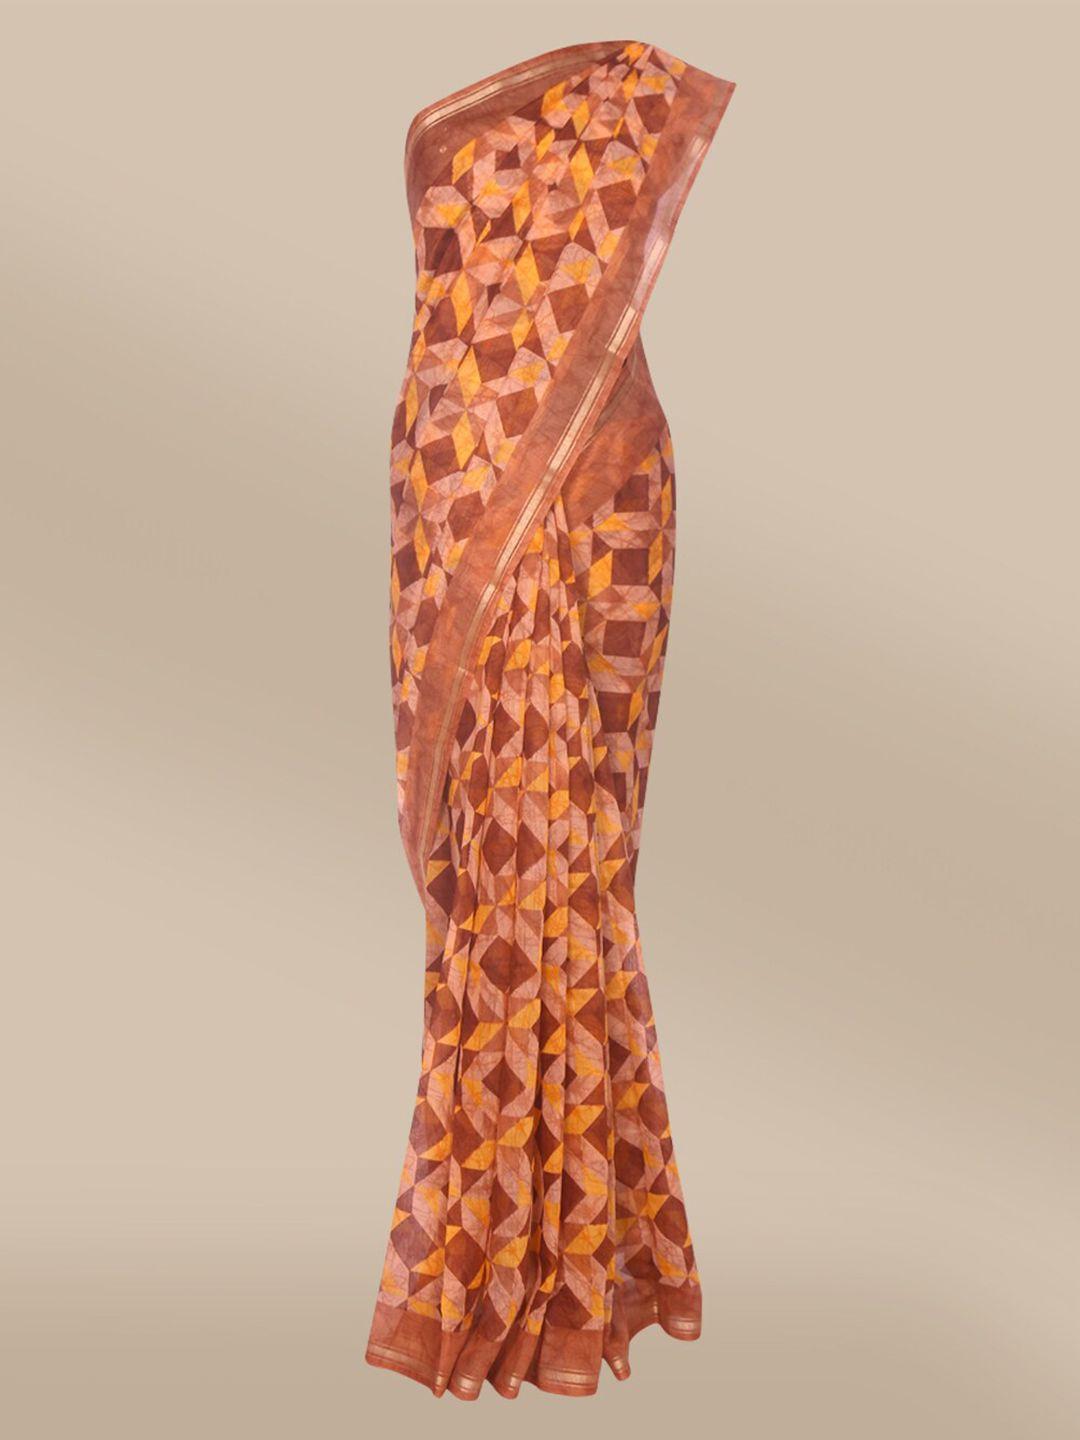 the chennai silks brown & yellow printed polyester bhagalpuri saree